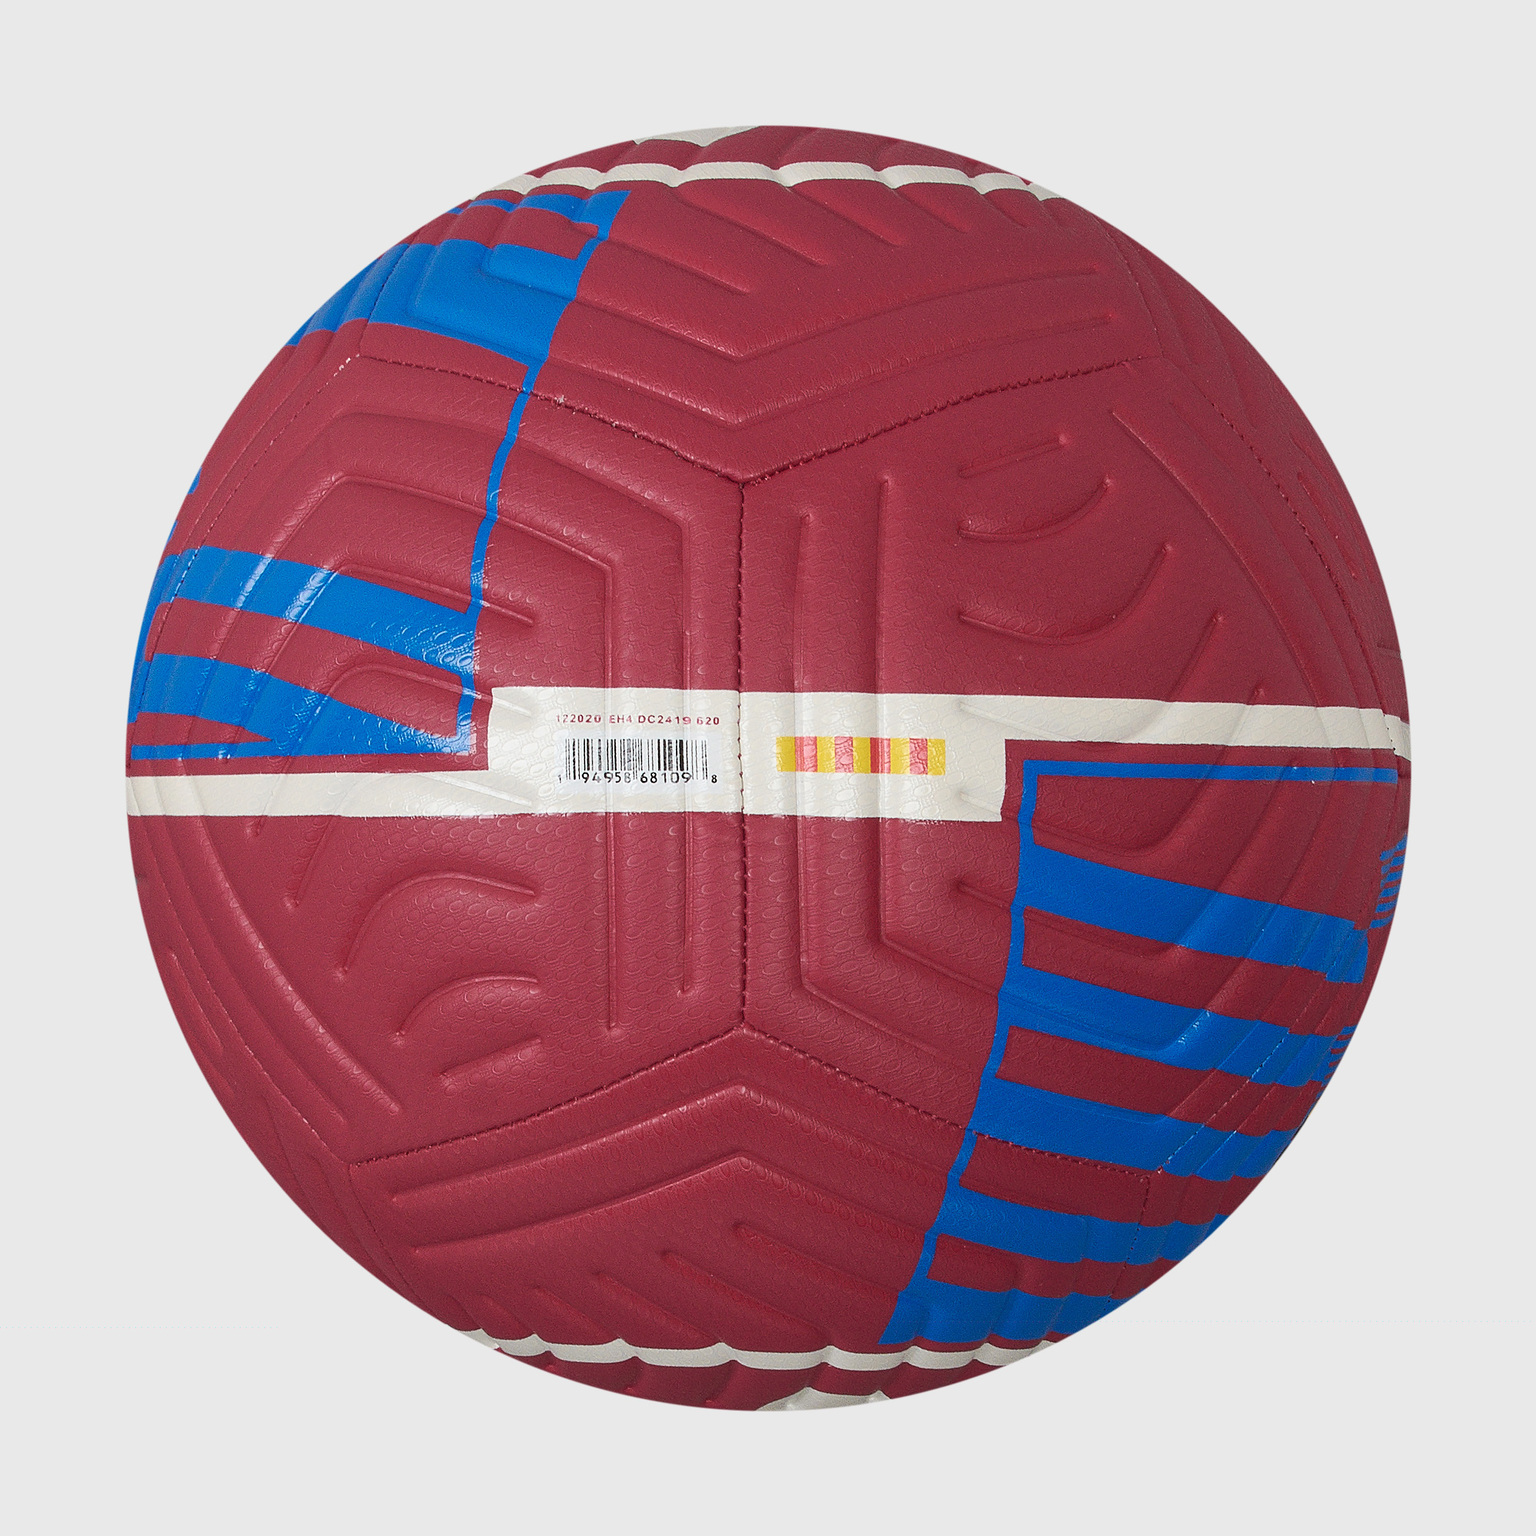 Футбольный мяч Nike Barcelona Strike DC2419-620